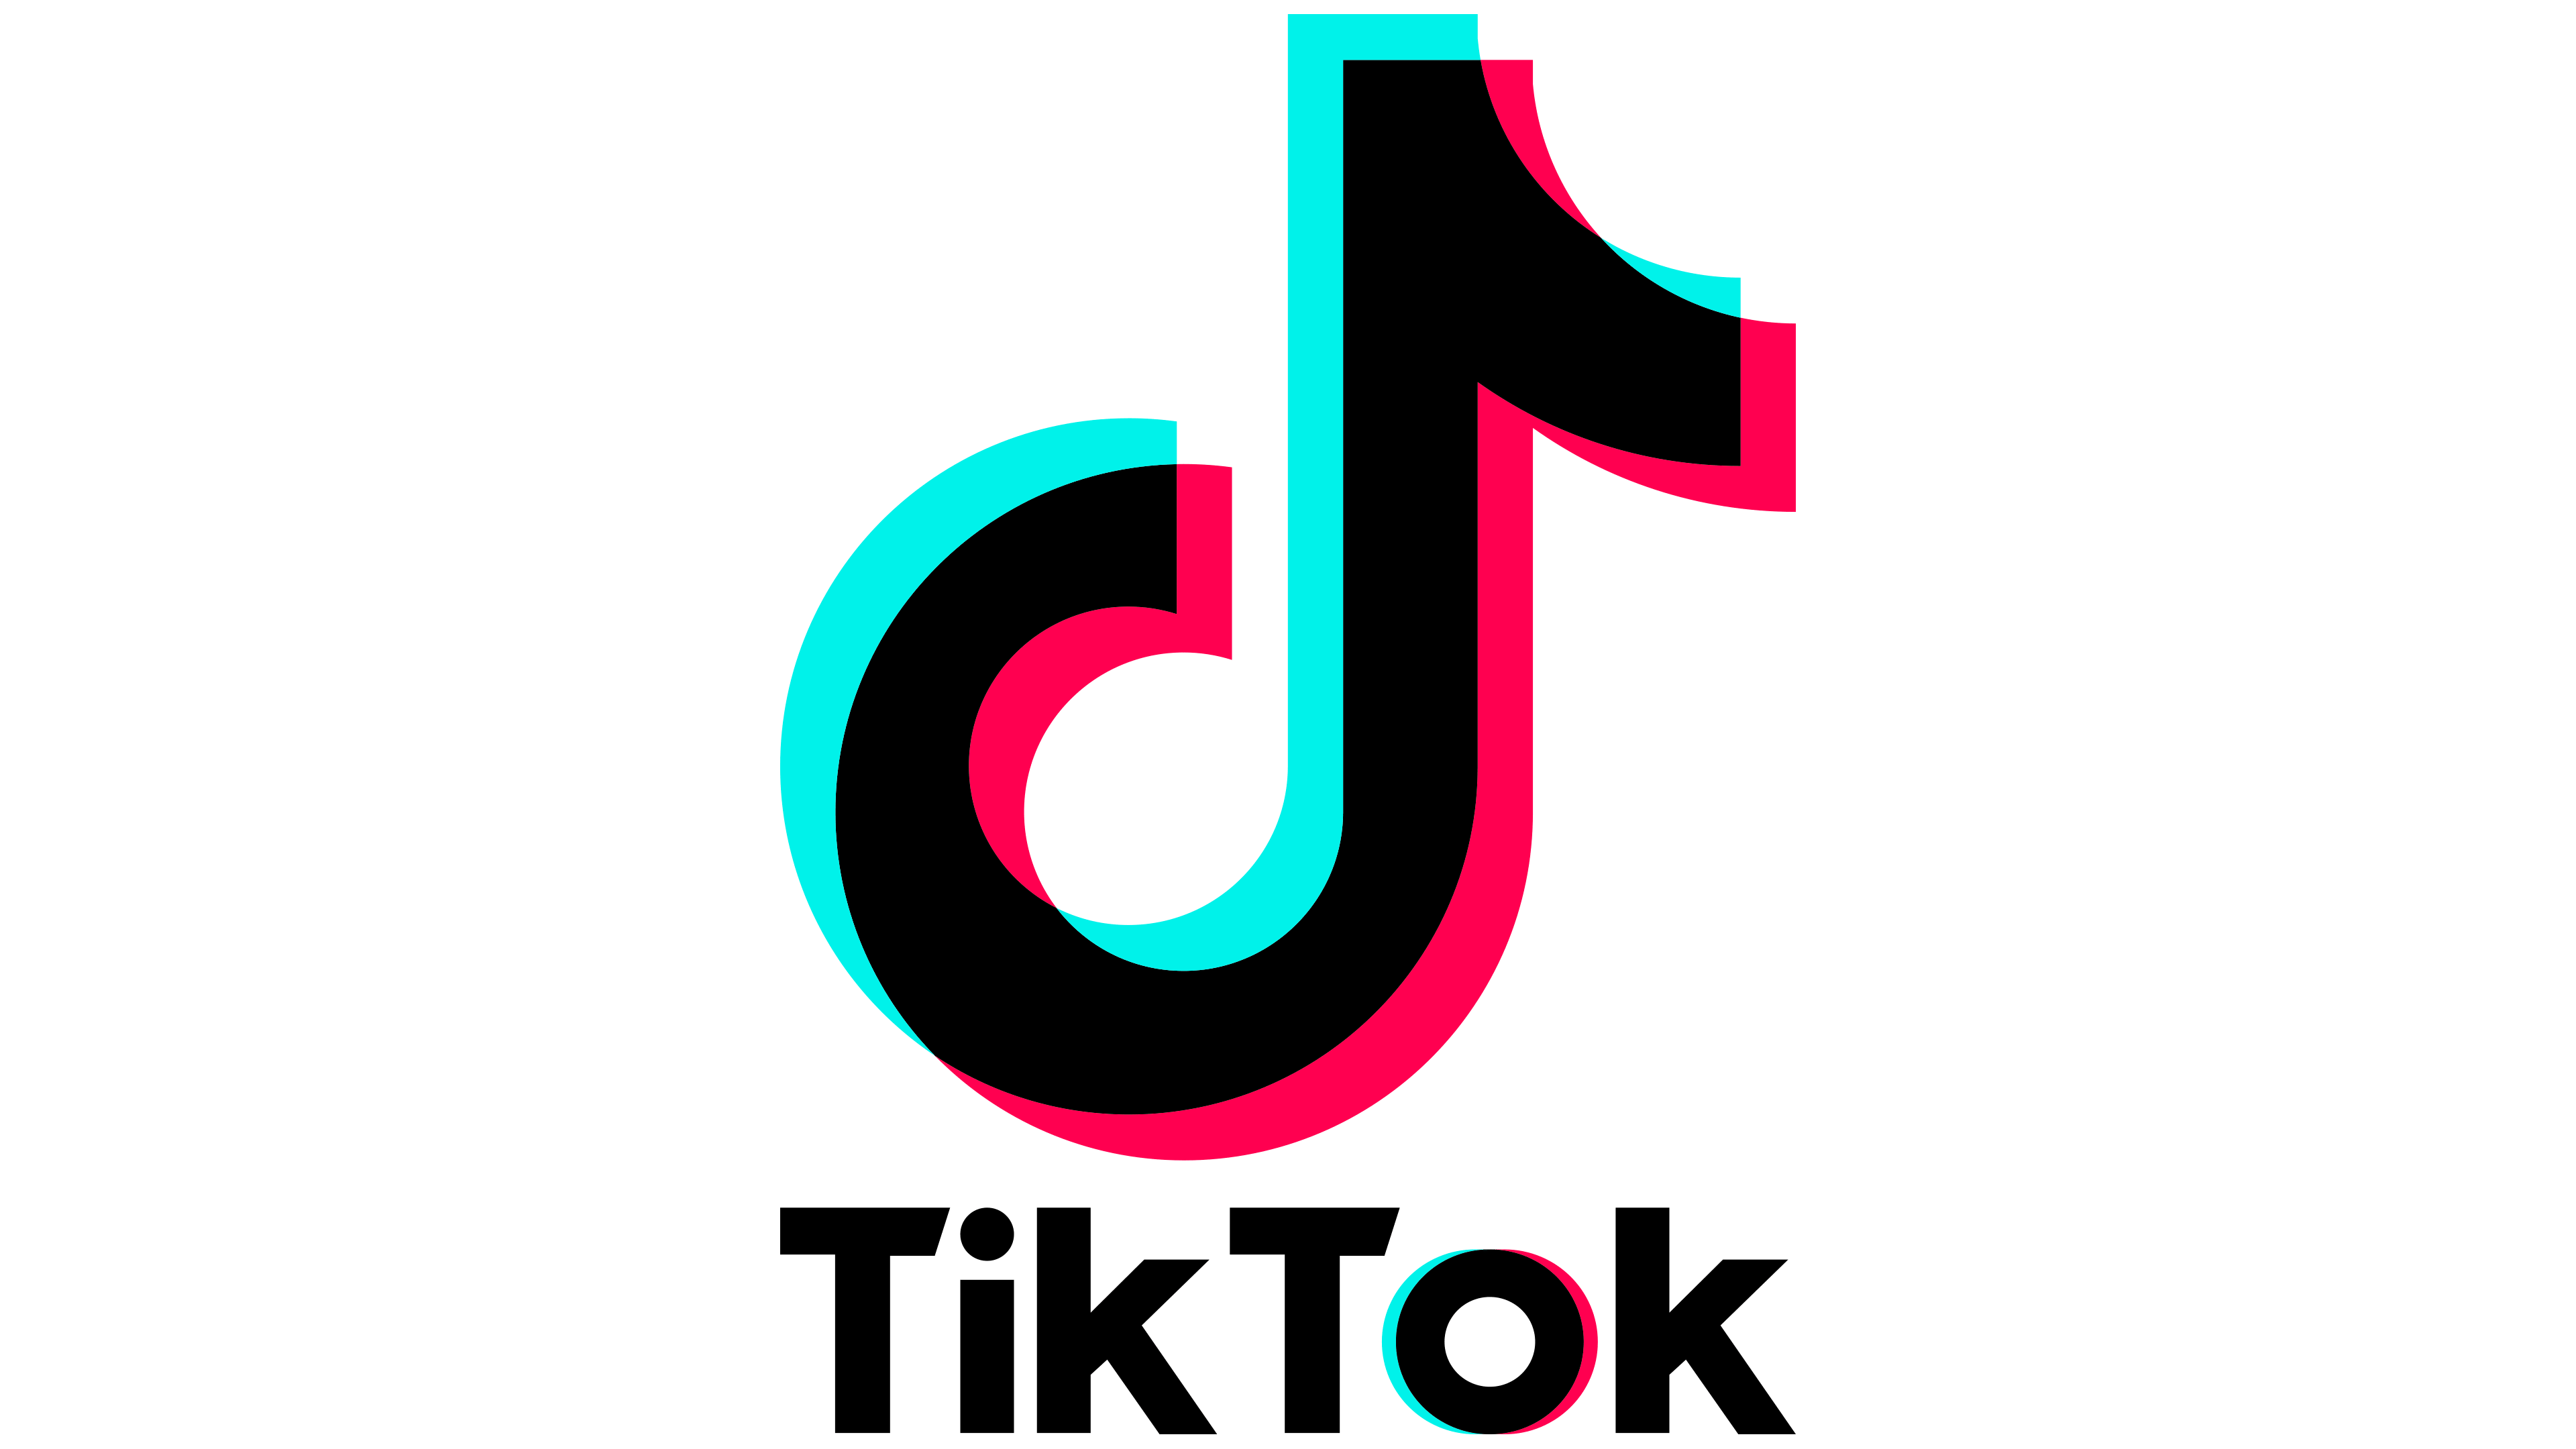 Tiktok Logo Storia Valore Png Images And Photos Finder